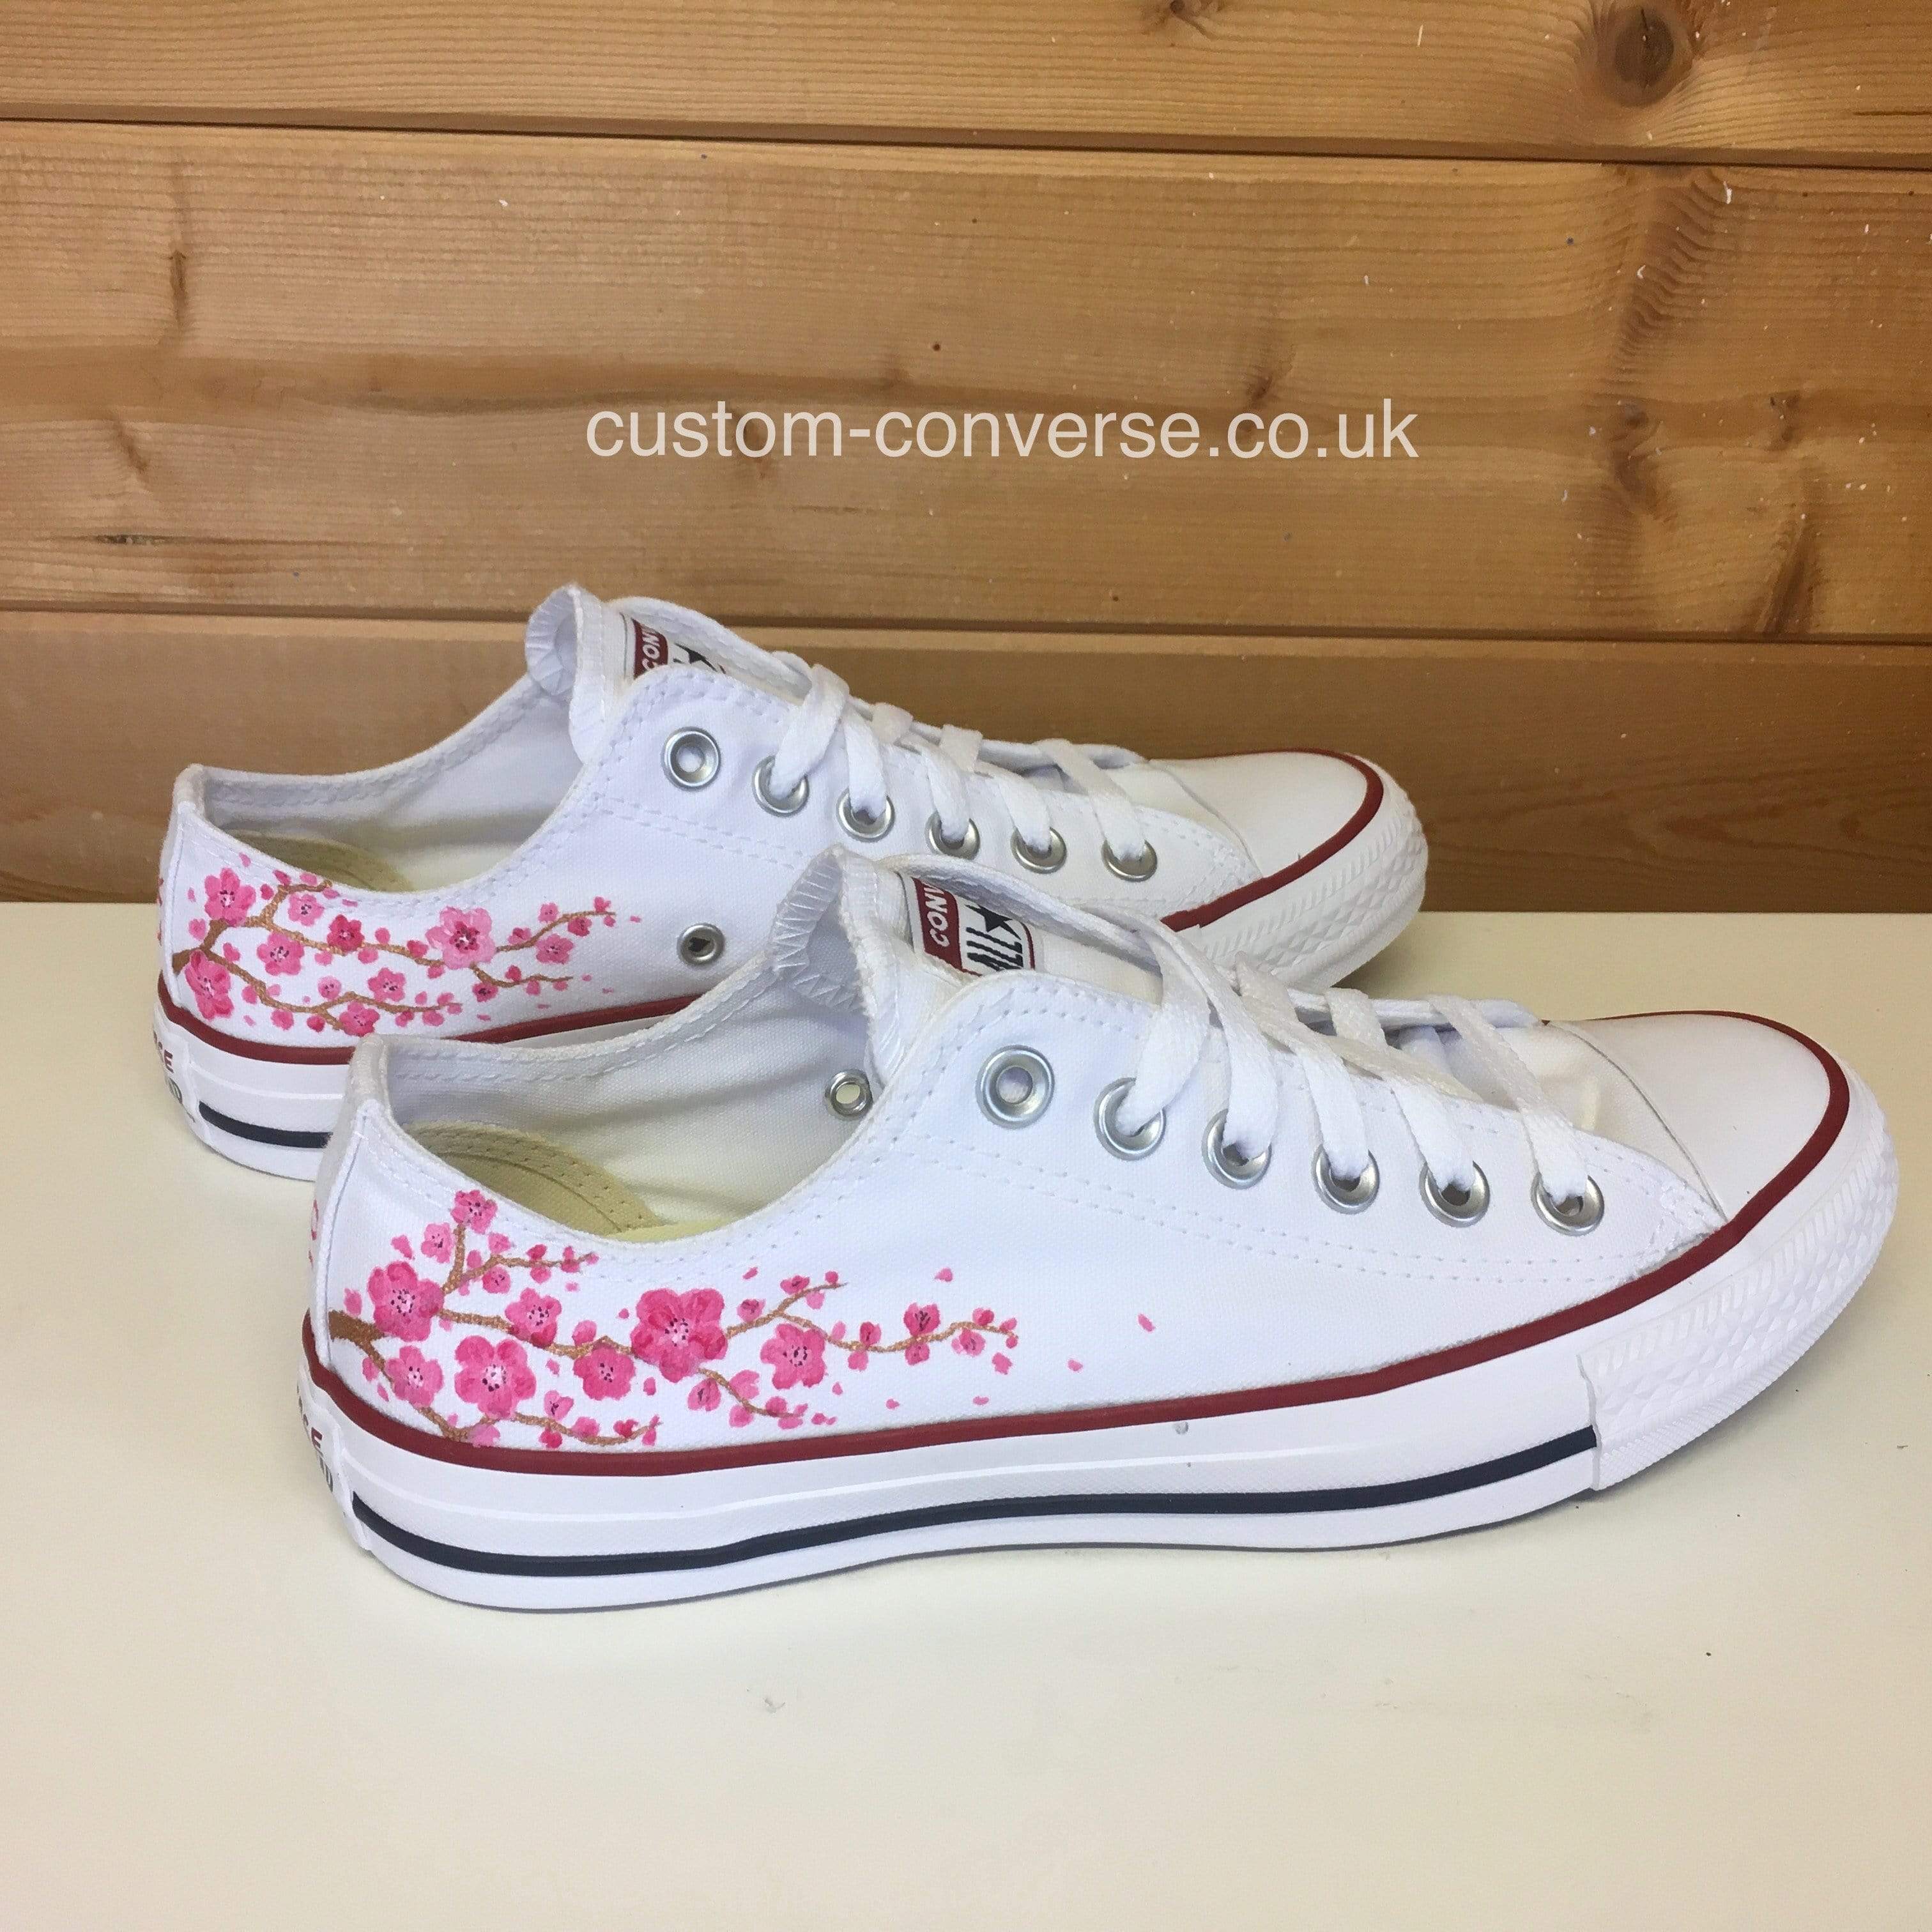 Cherry Blossom Custom Converse Ltd